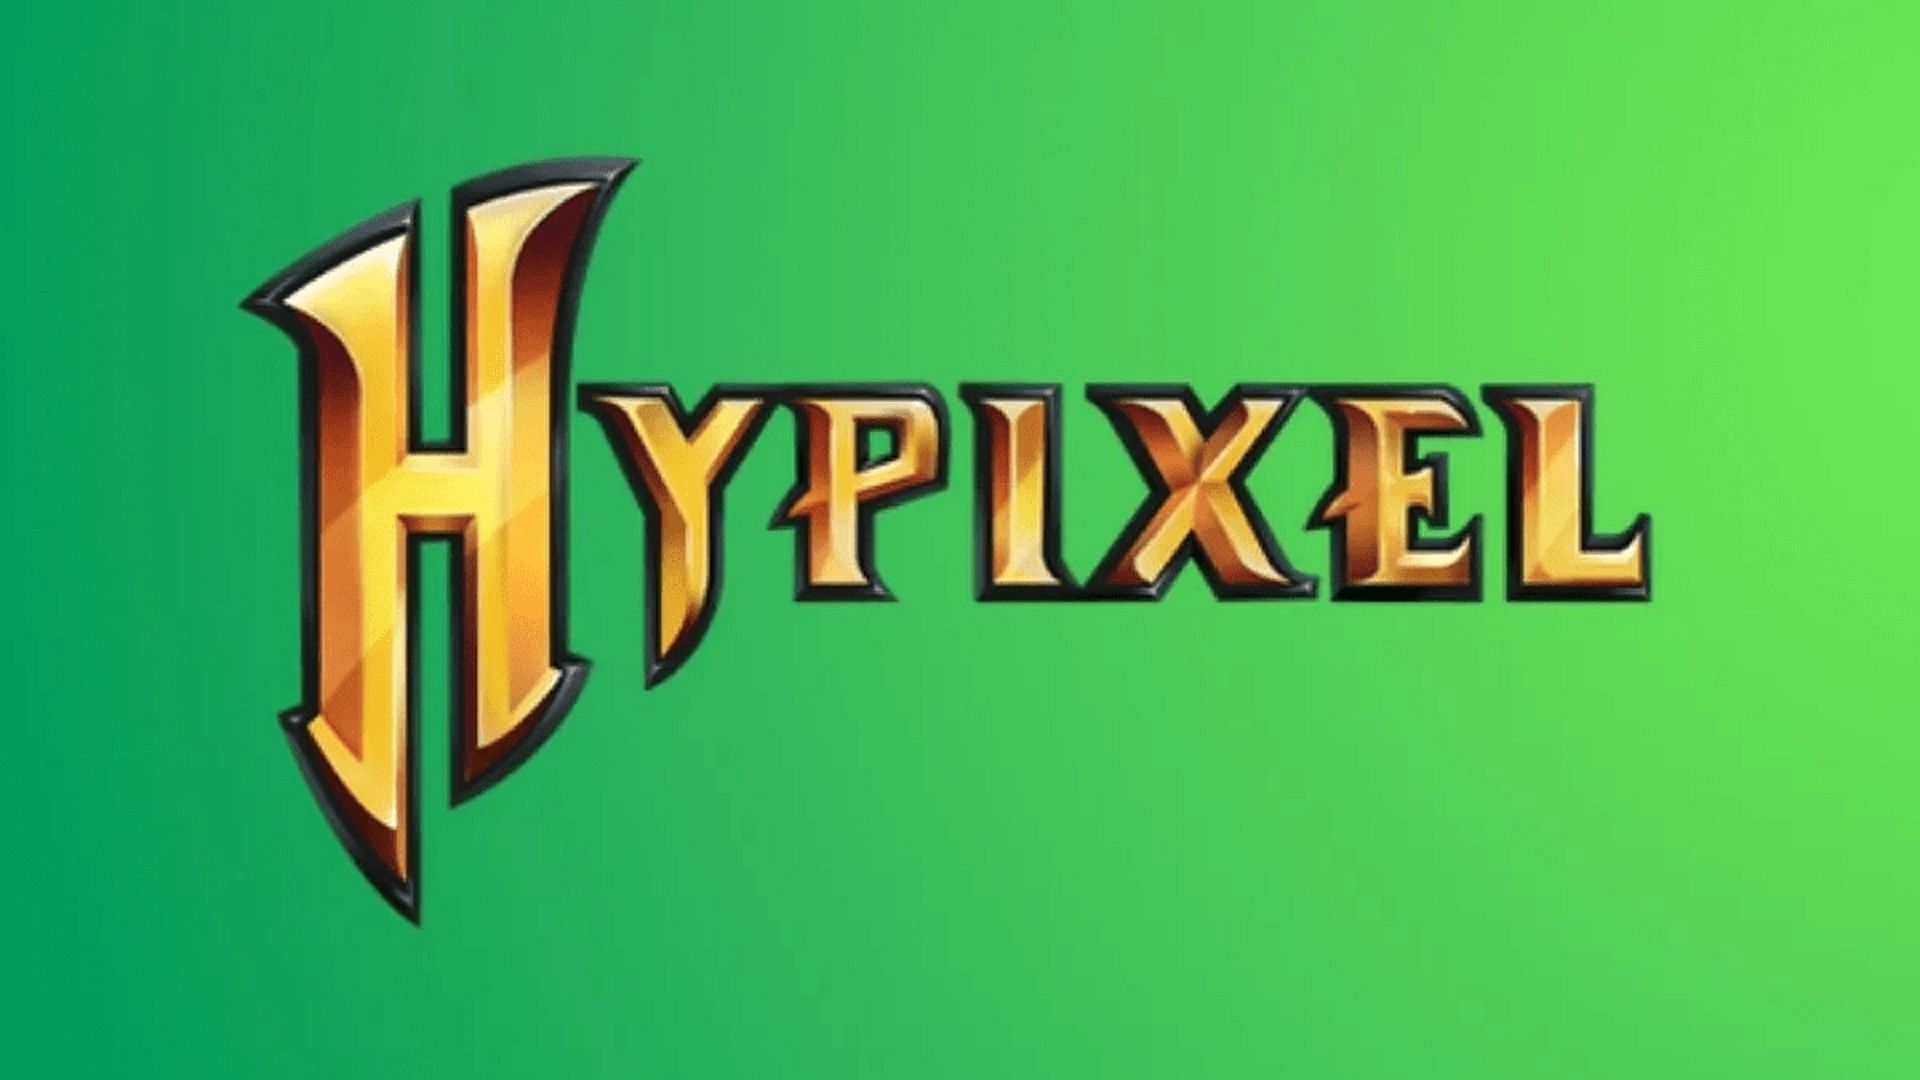 Hypixel remains the golden standard of Minecraft servers (Image via Hypixel.net)